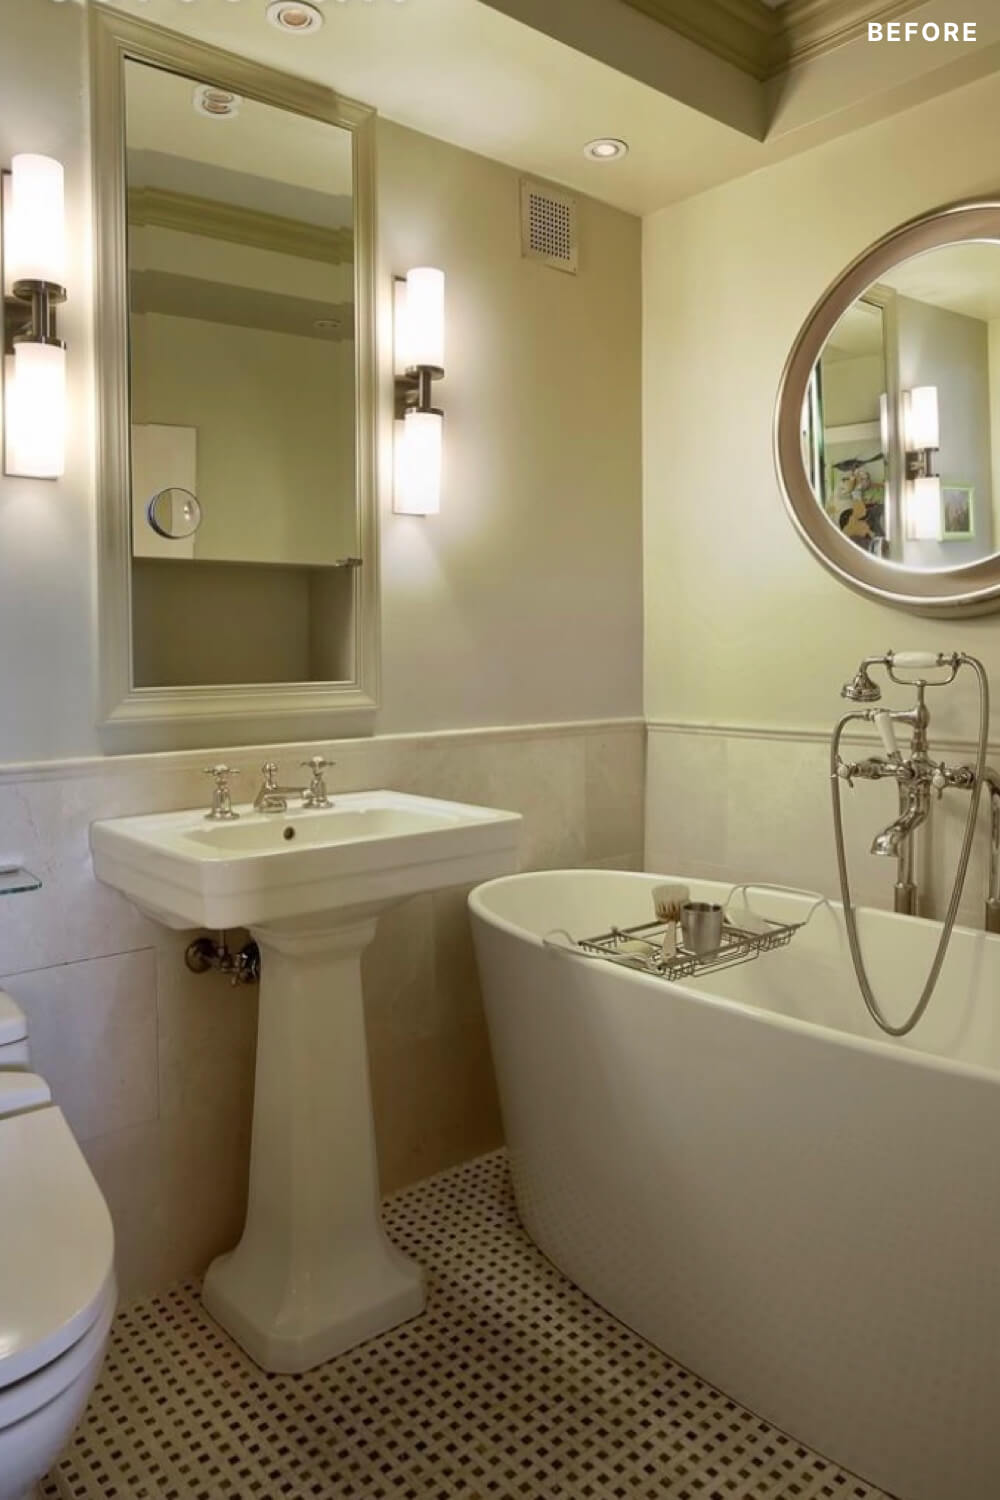 7 Bathtub To Shower Conversions That, Bathroom With Shower And Bathtub